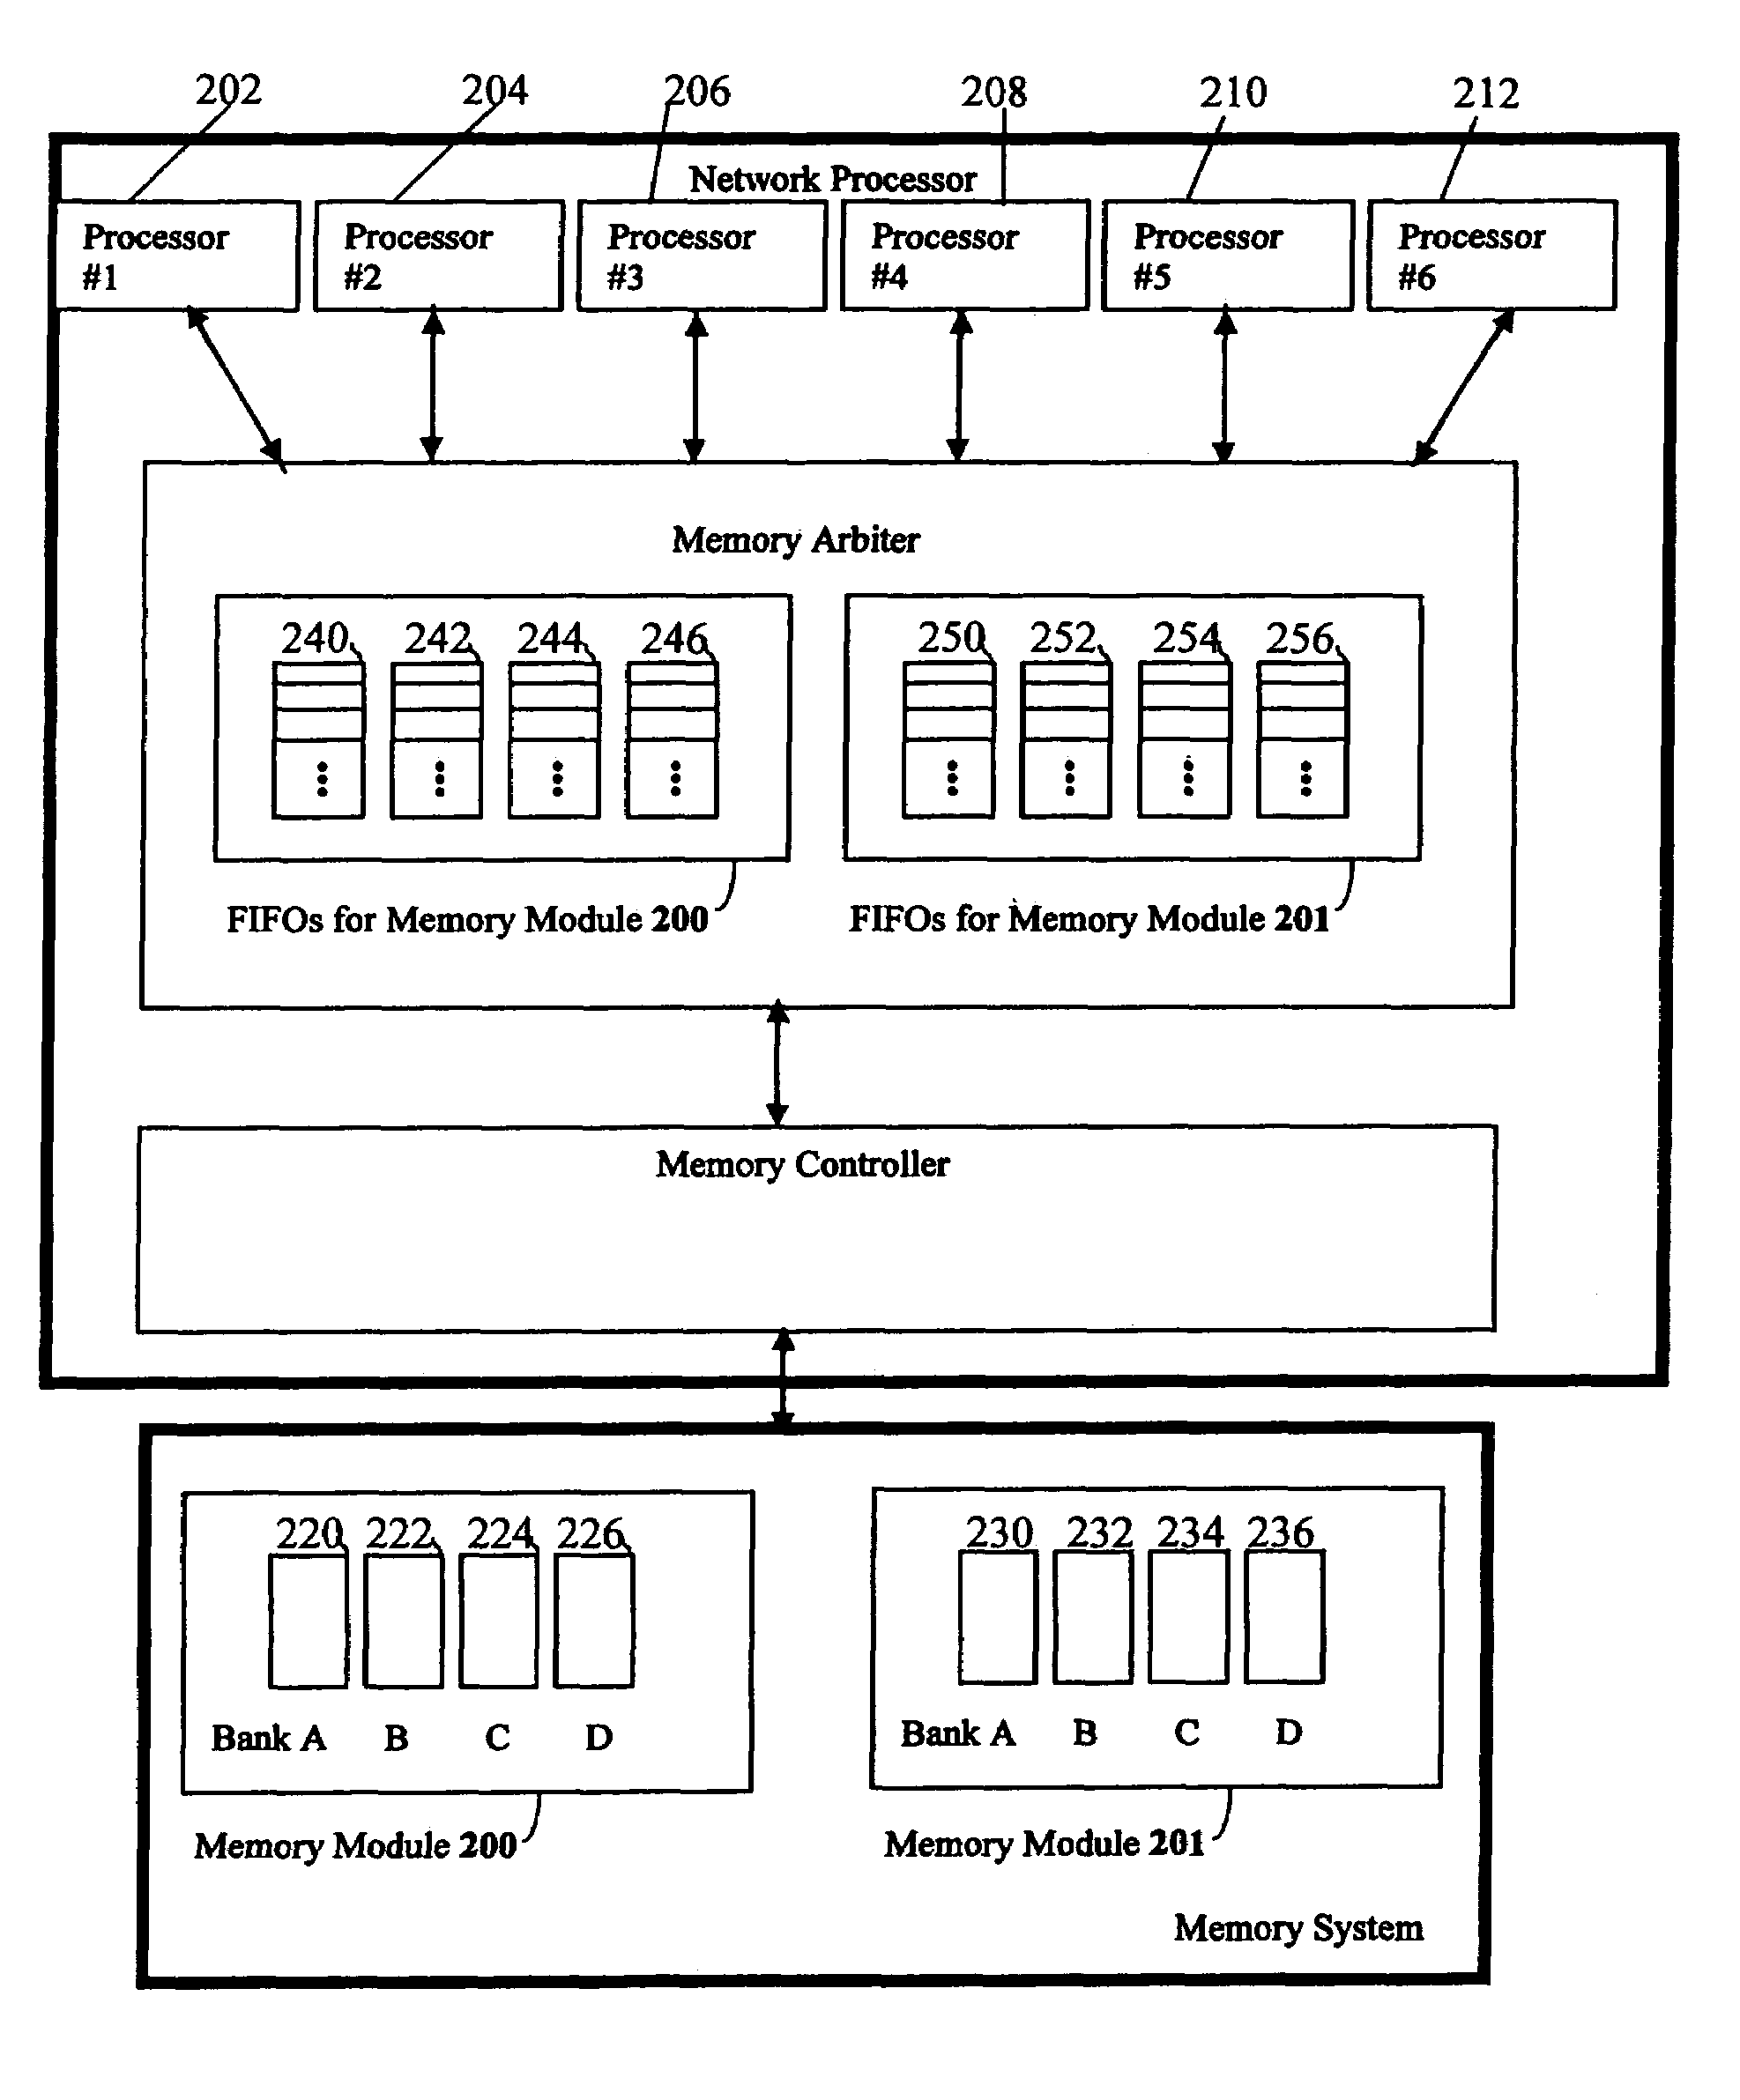 Atomic read/write support in a multi-module memory configuration